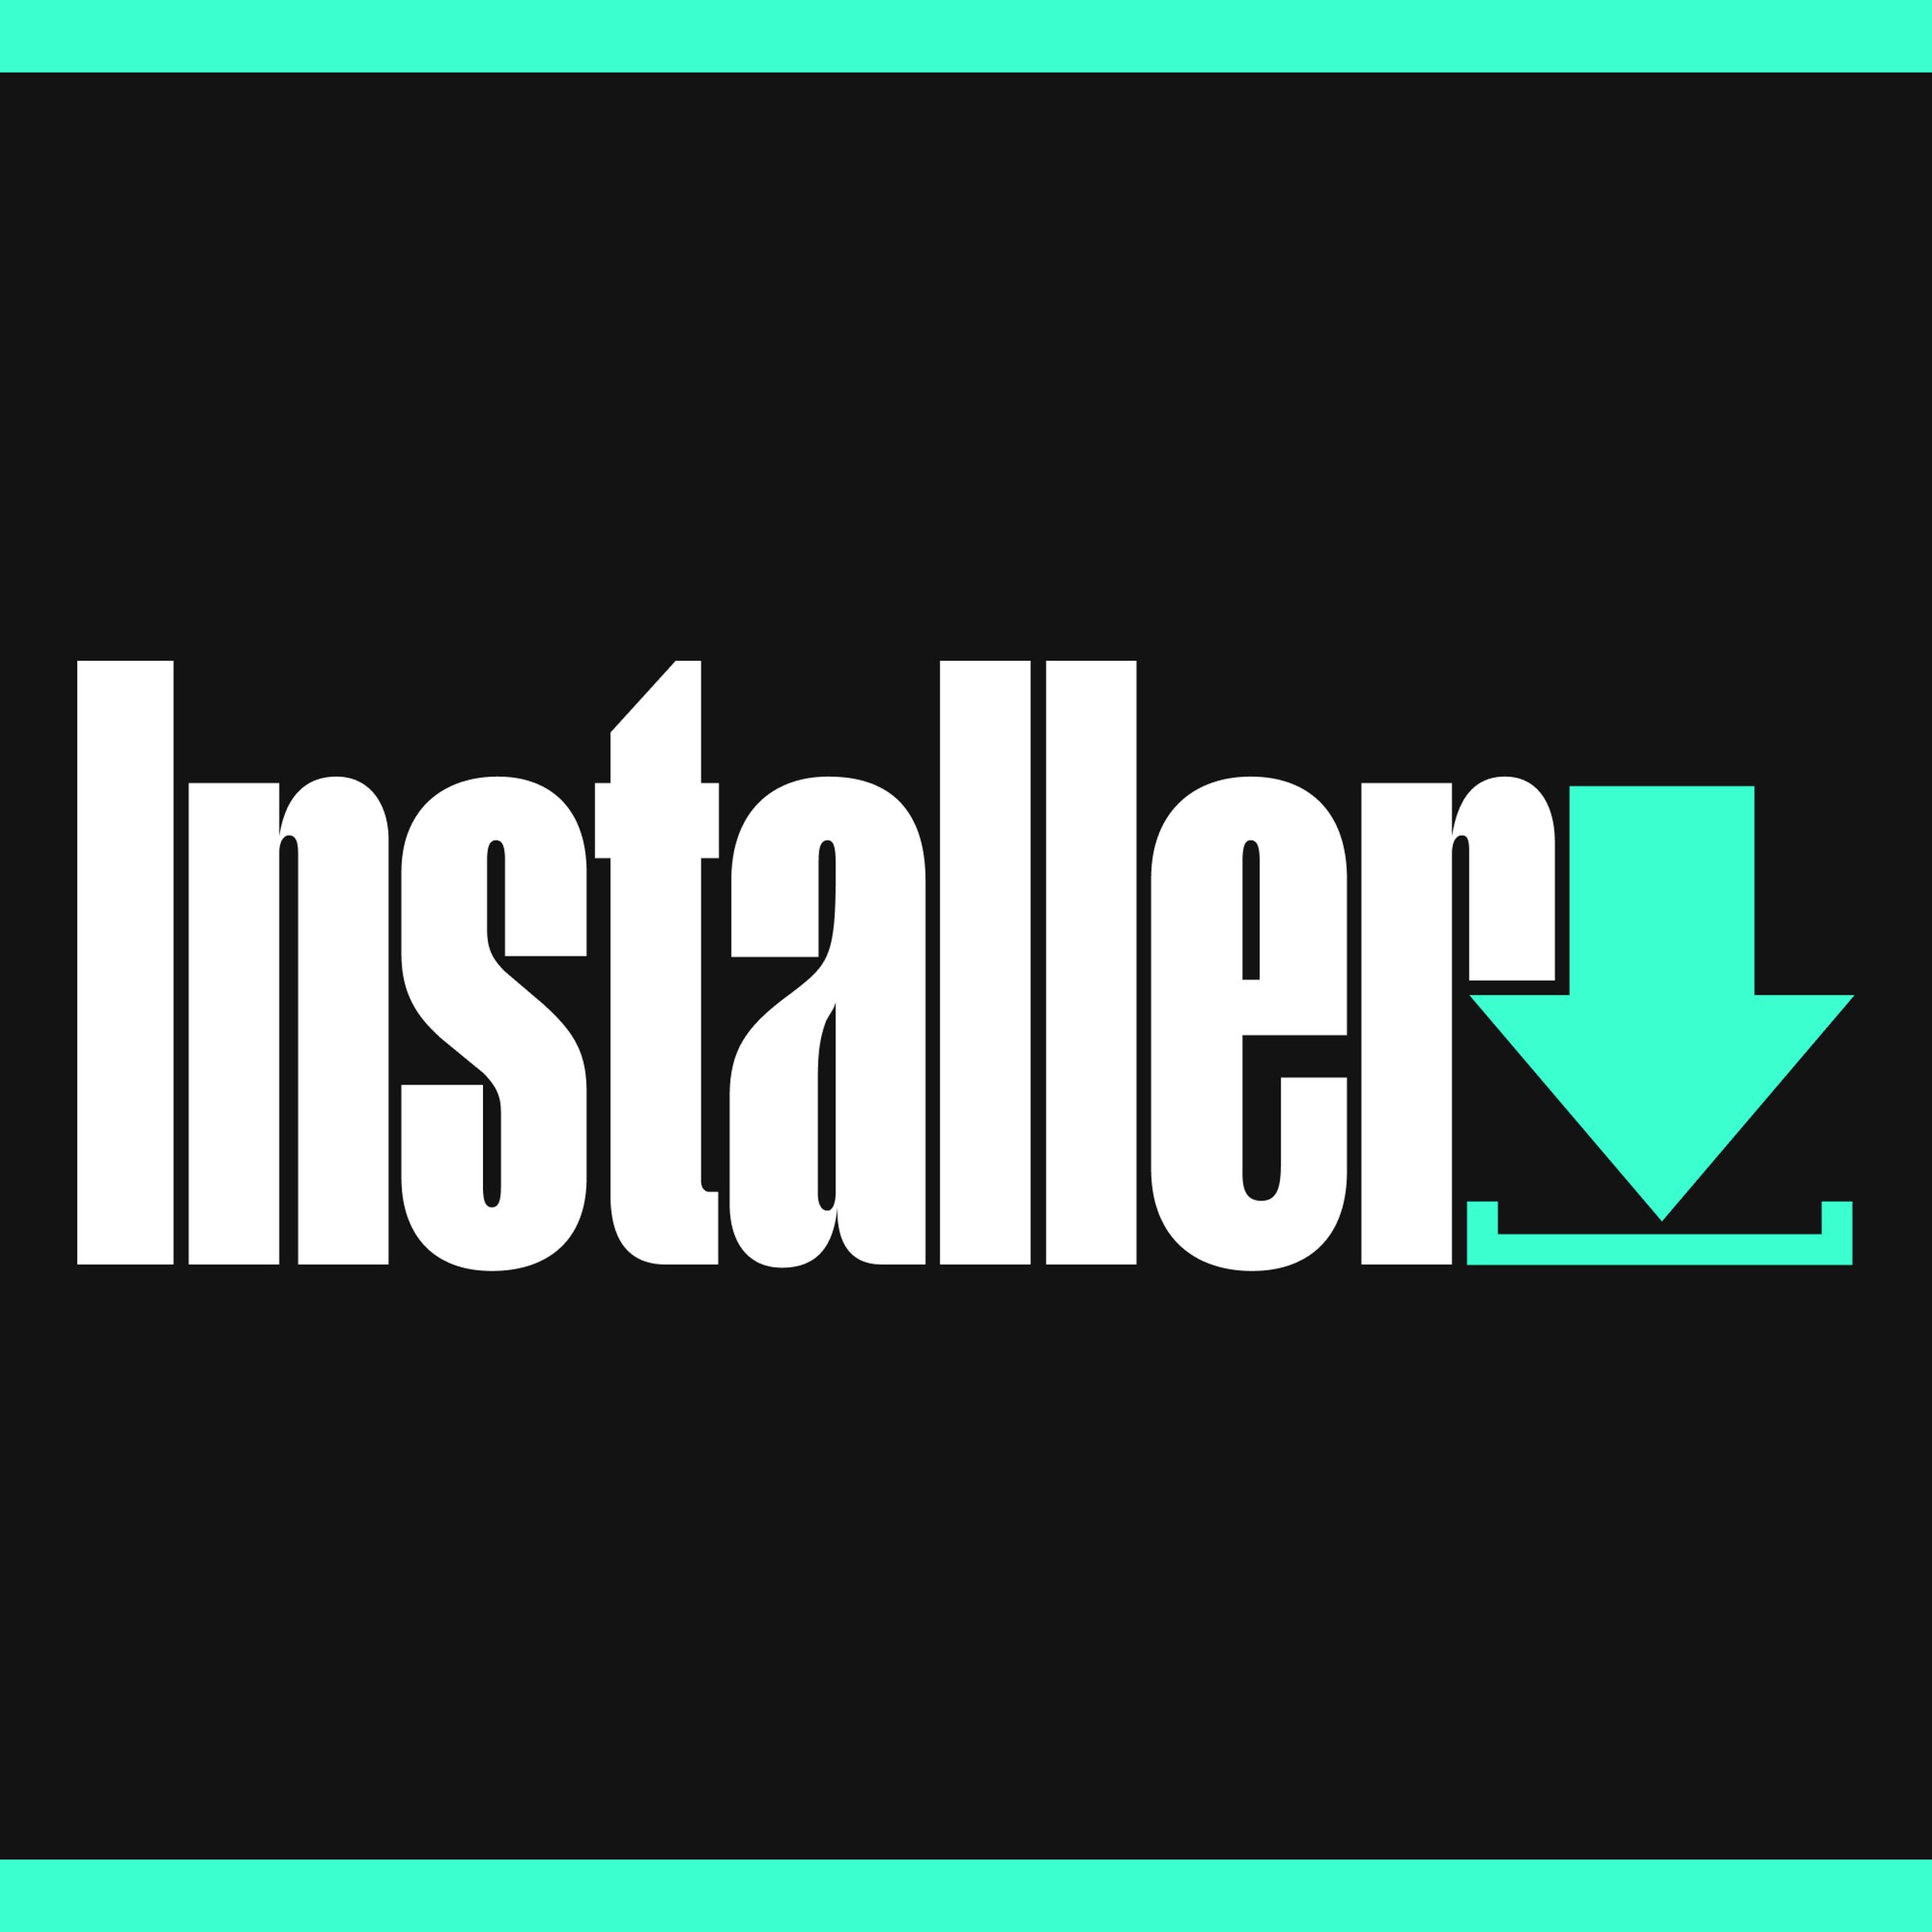 An illustration of the Installer logo on a black background.